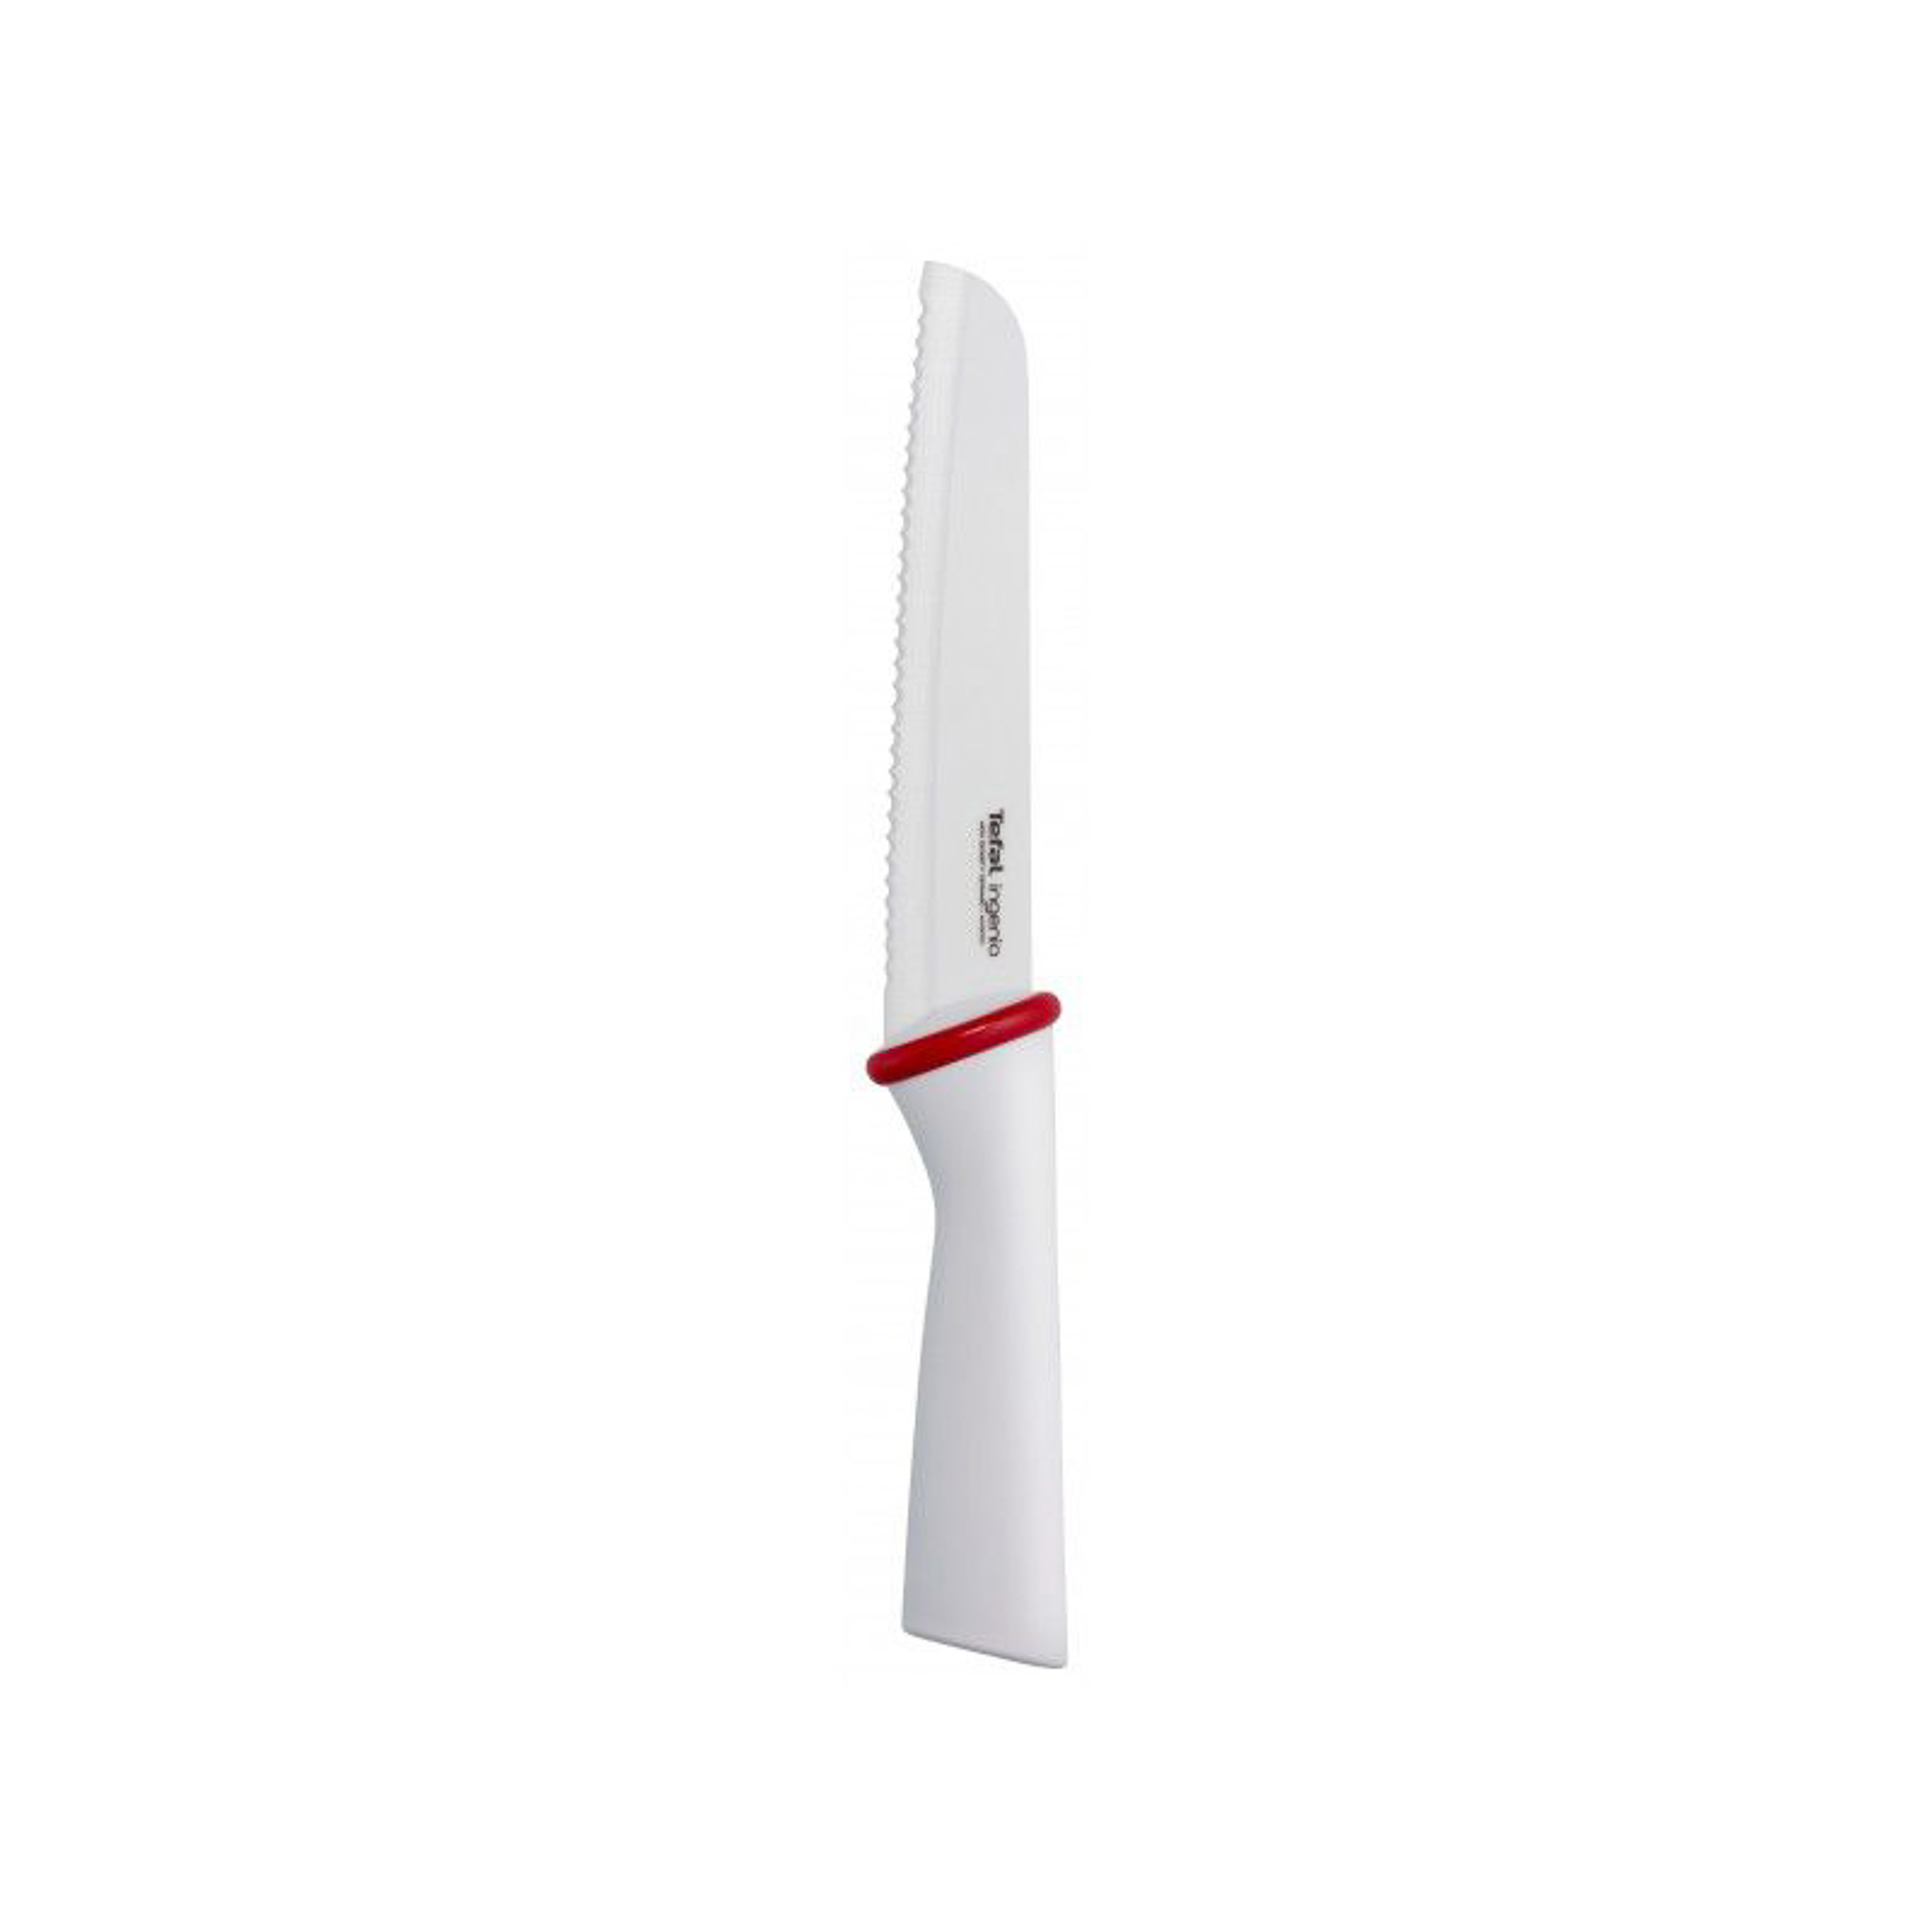 Нож для хлеба Tefal ingenio white (2100088402), цвет белый - фото 1